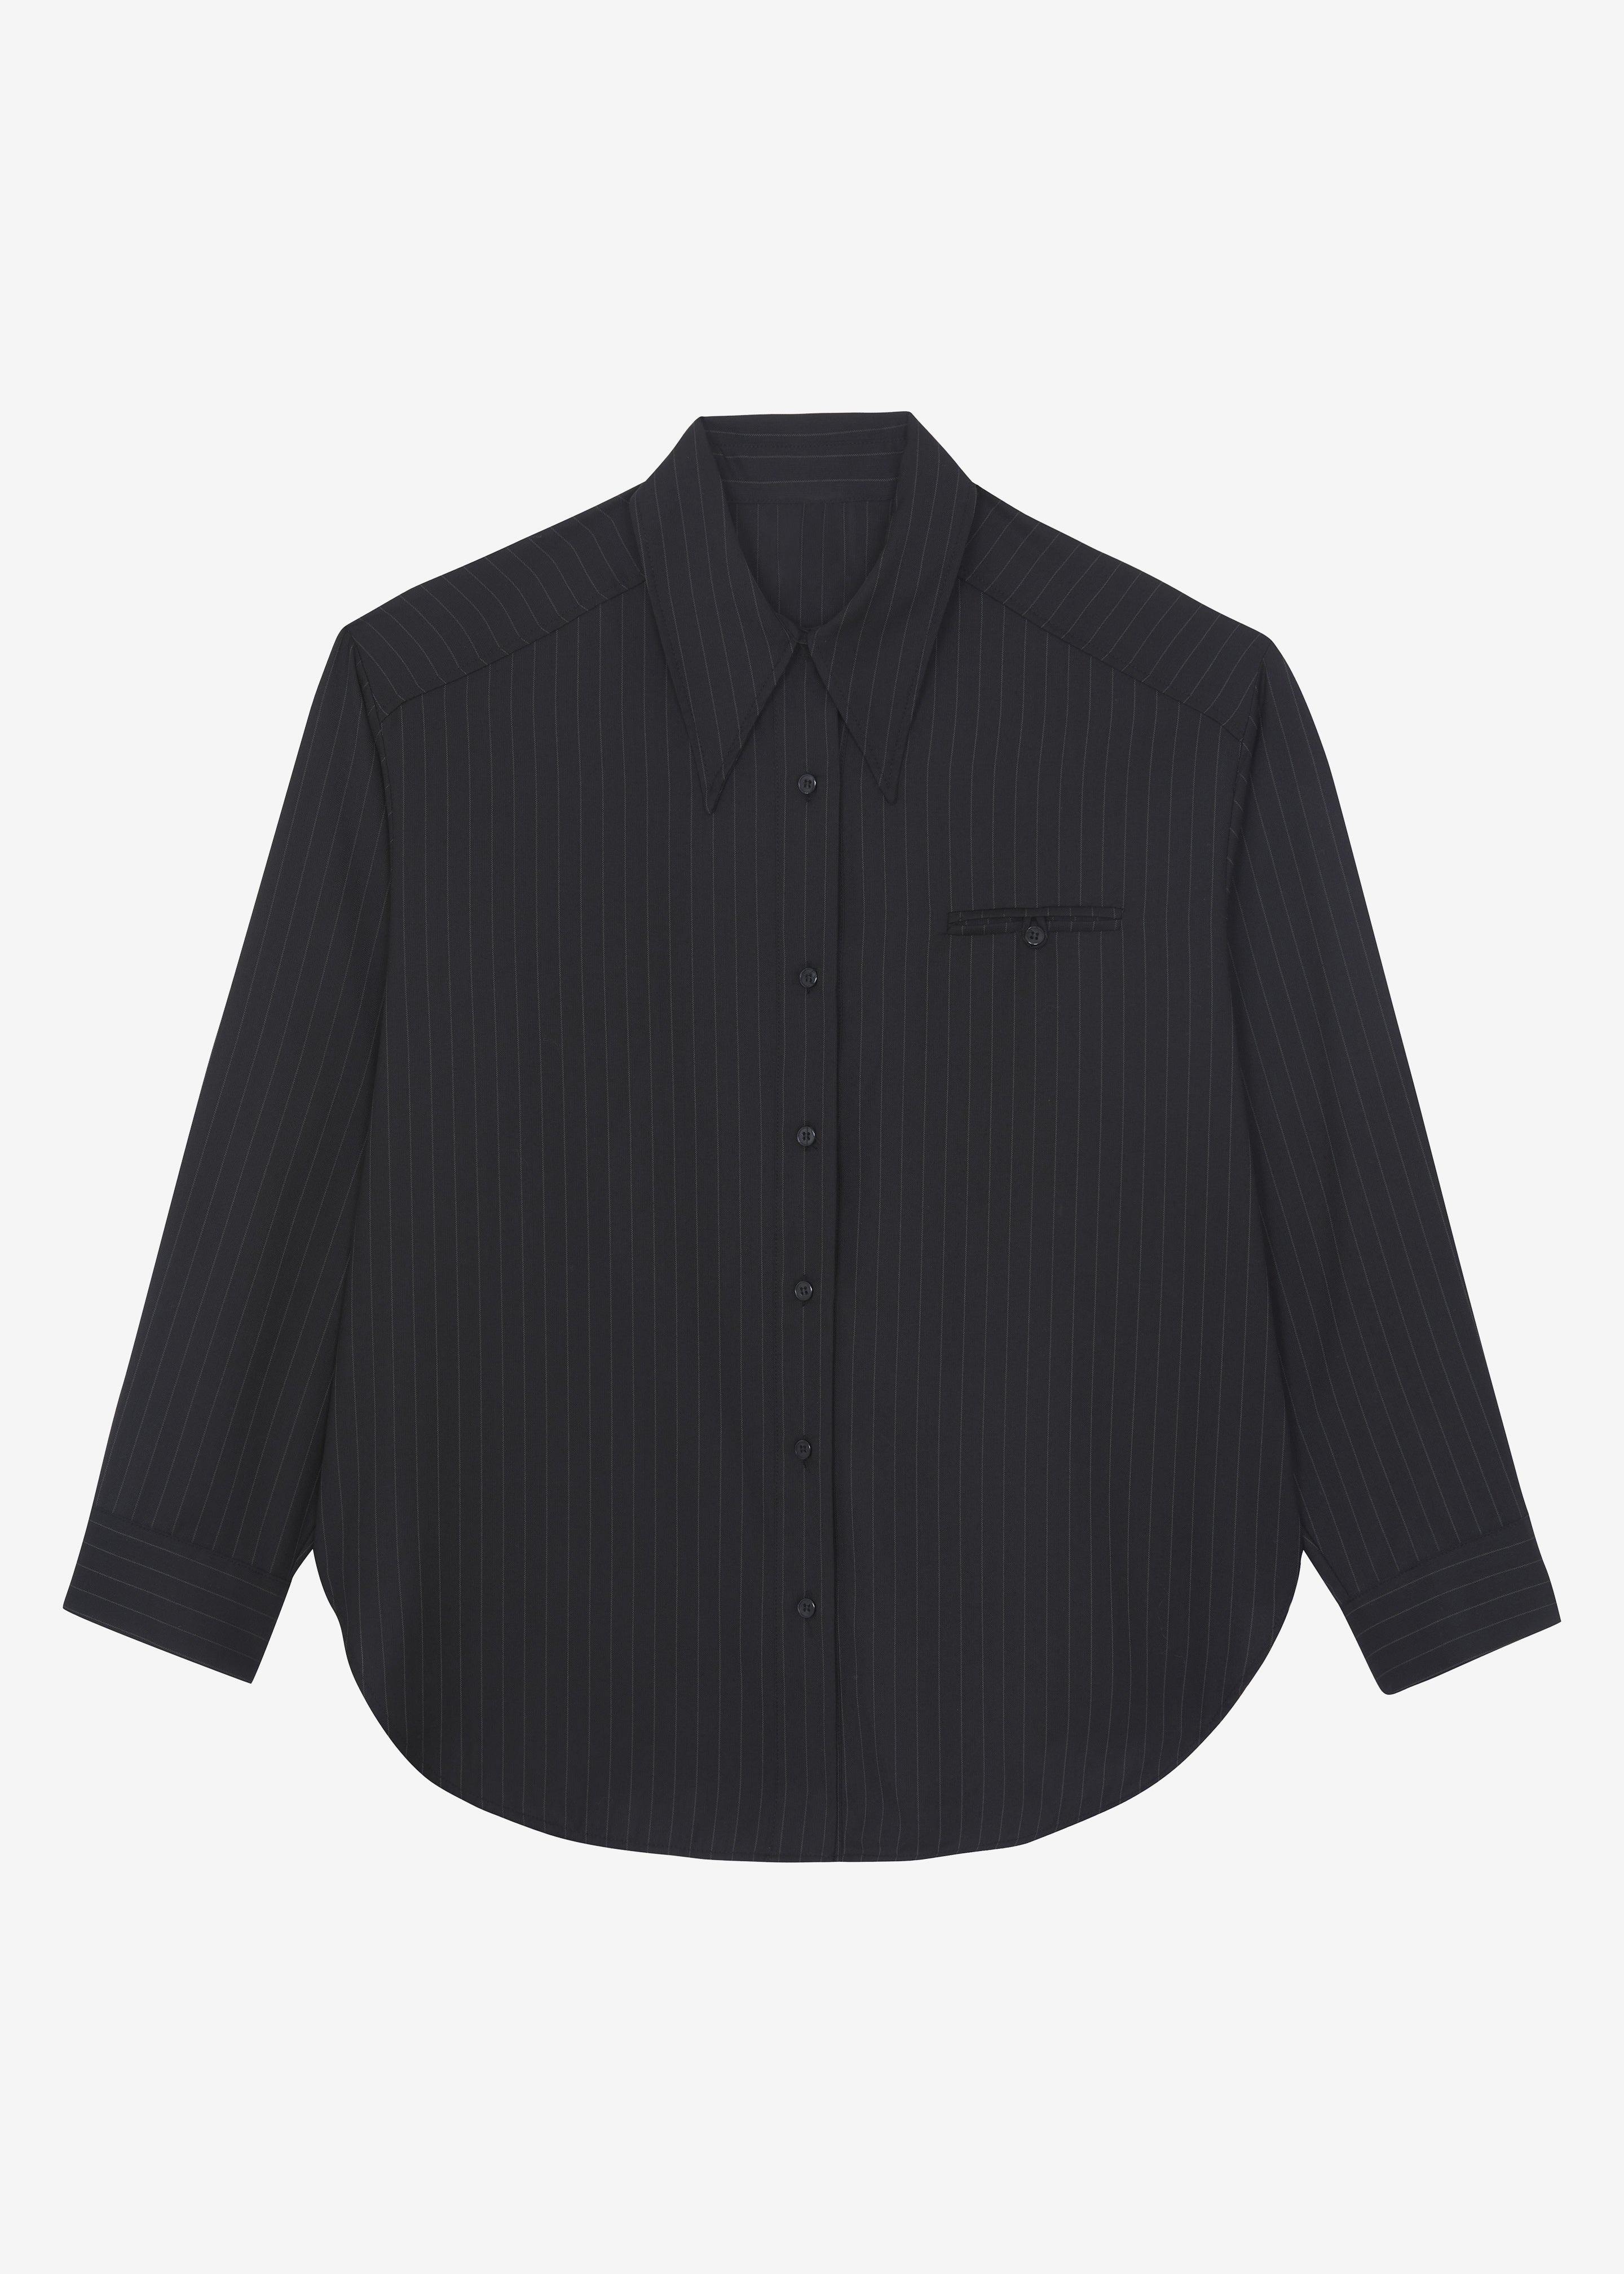 Kerry Button Up Shirt - Black Pinstripe - 20